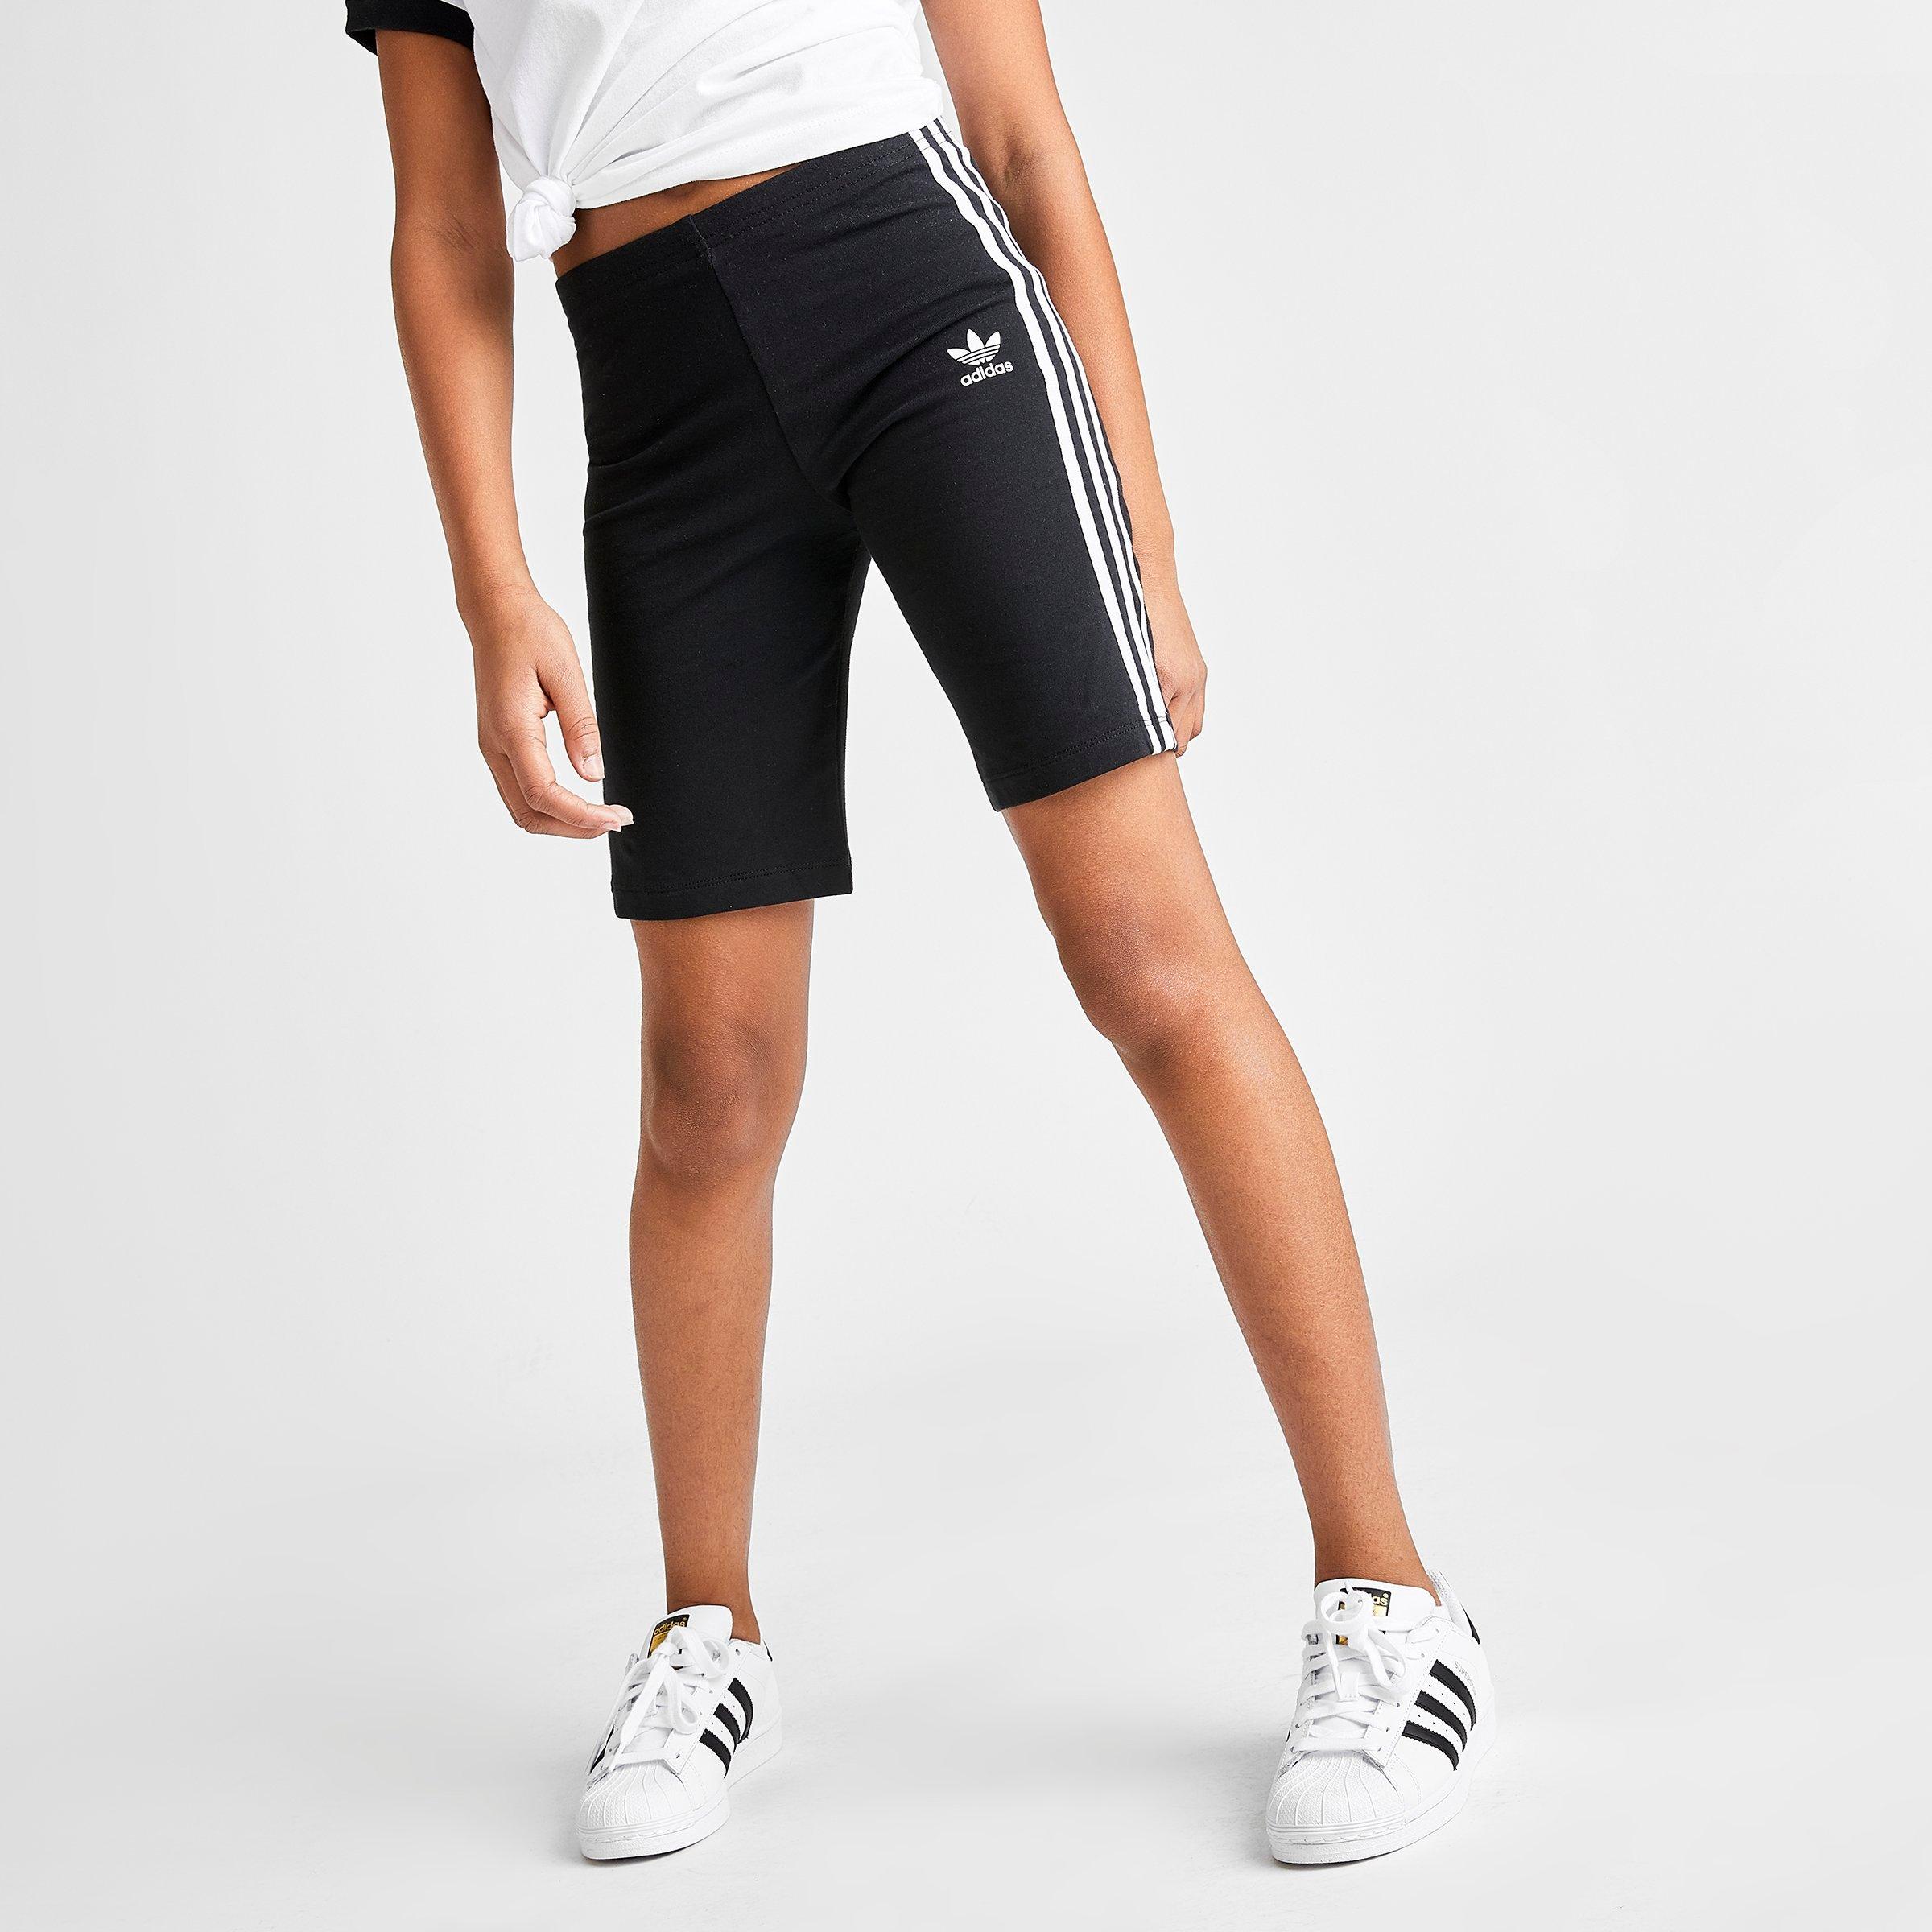 Adidas Bike Shorts Hotsell, 53% OFF | espirituviajero.com